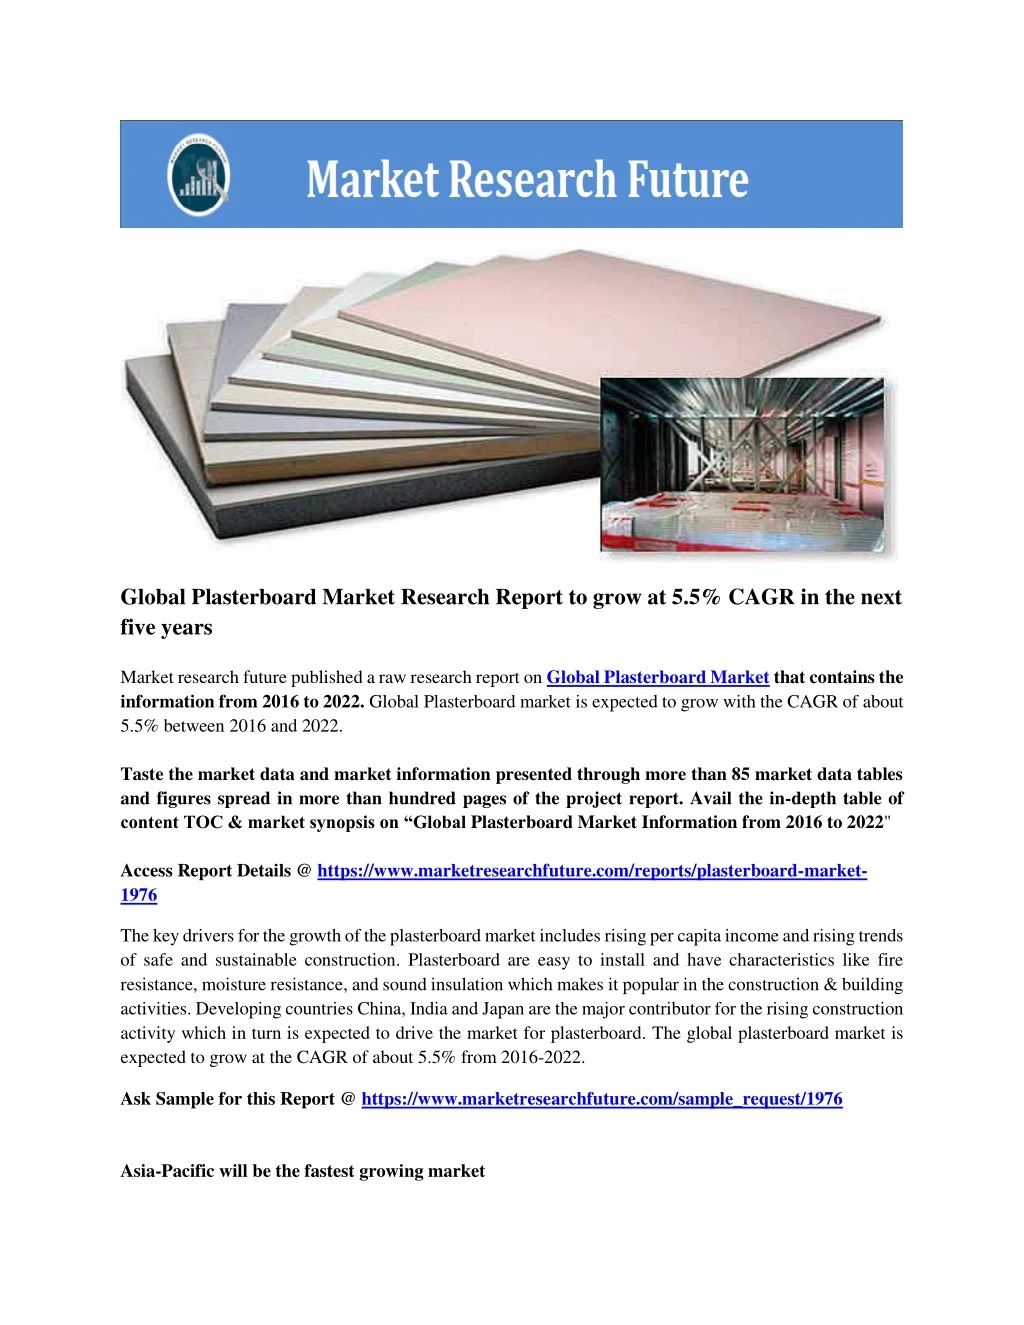 global plasterboard market research report